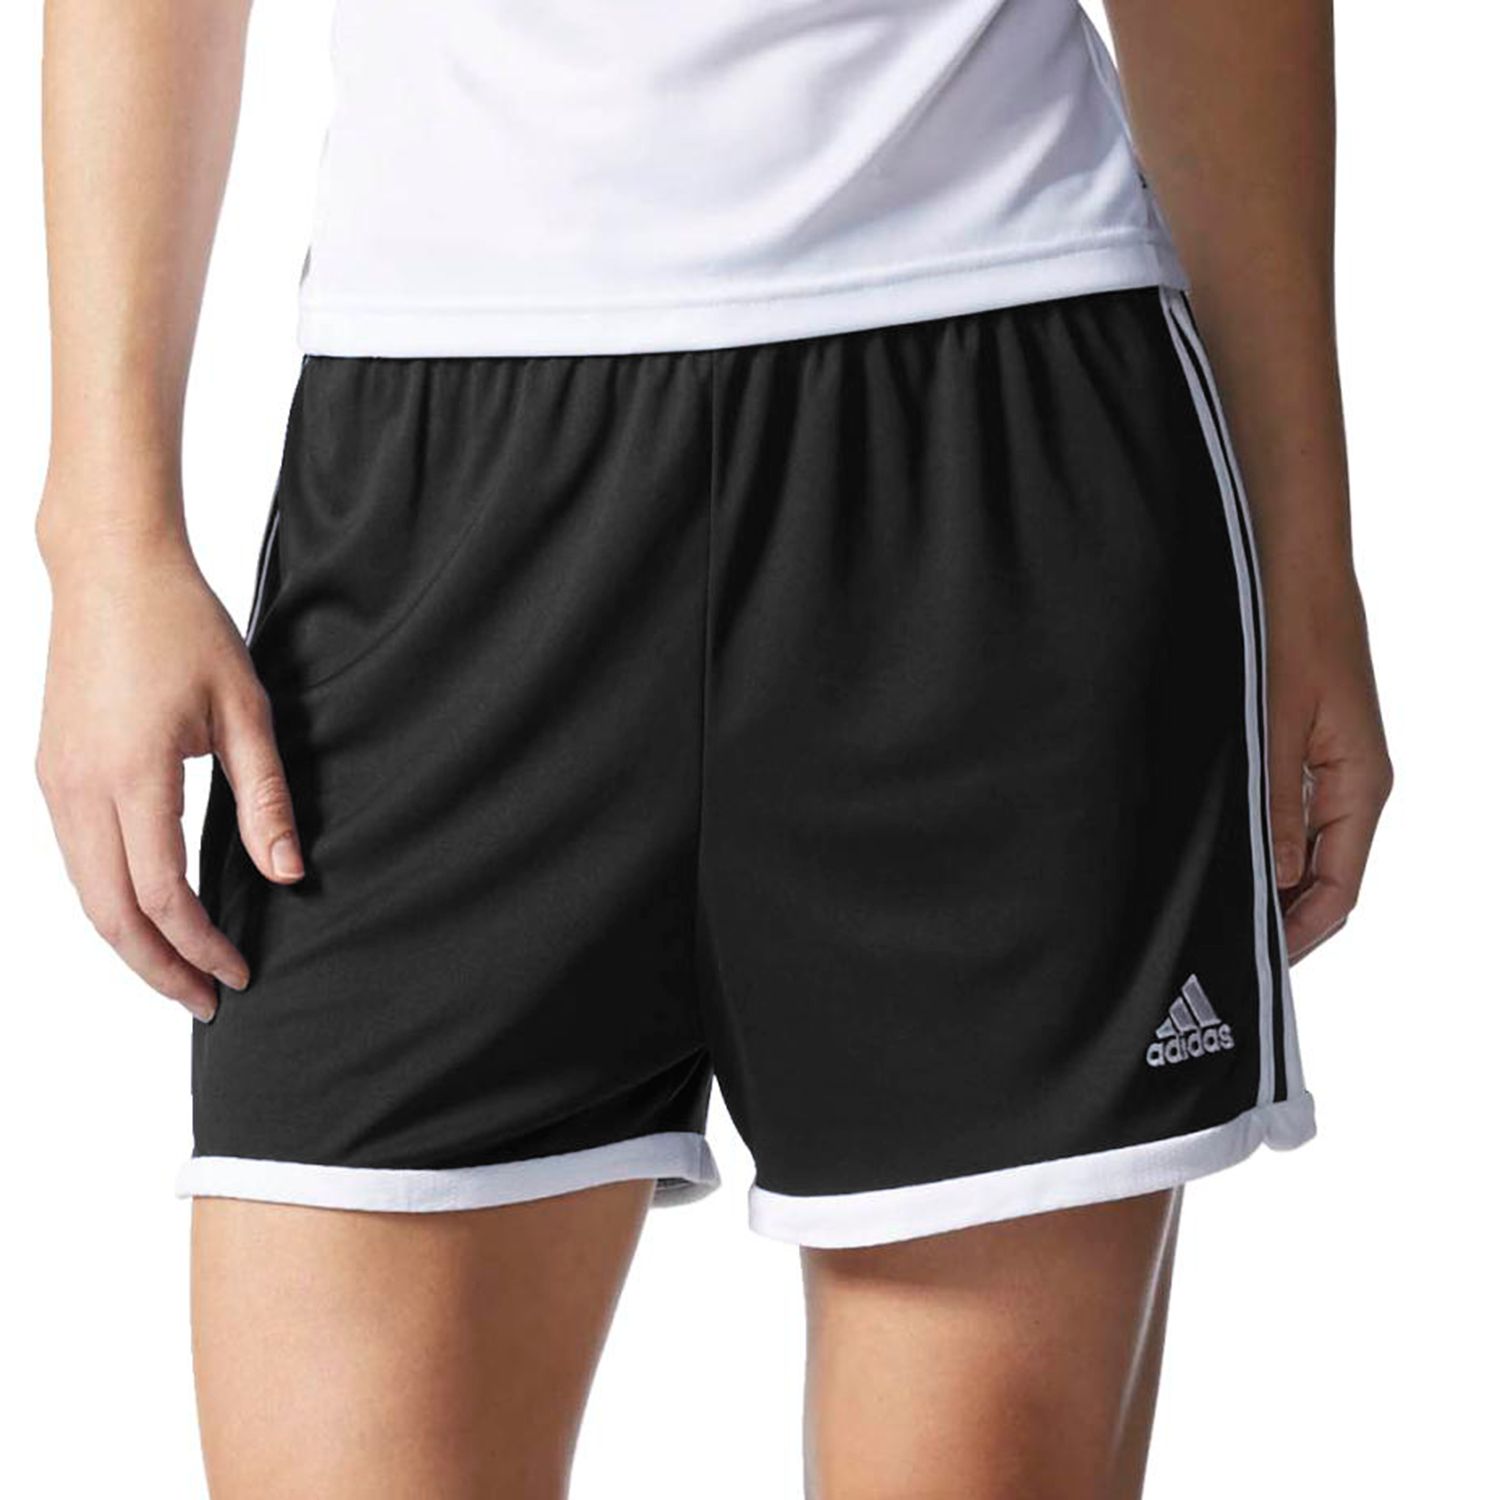 adidas women's climacool mesh shorts